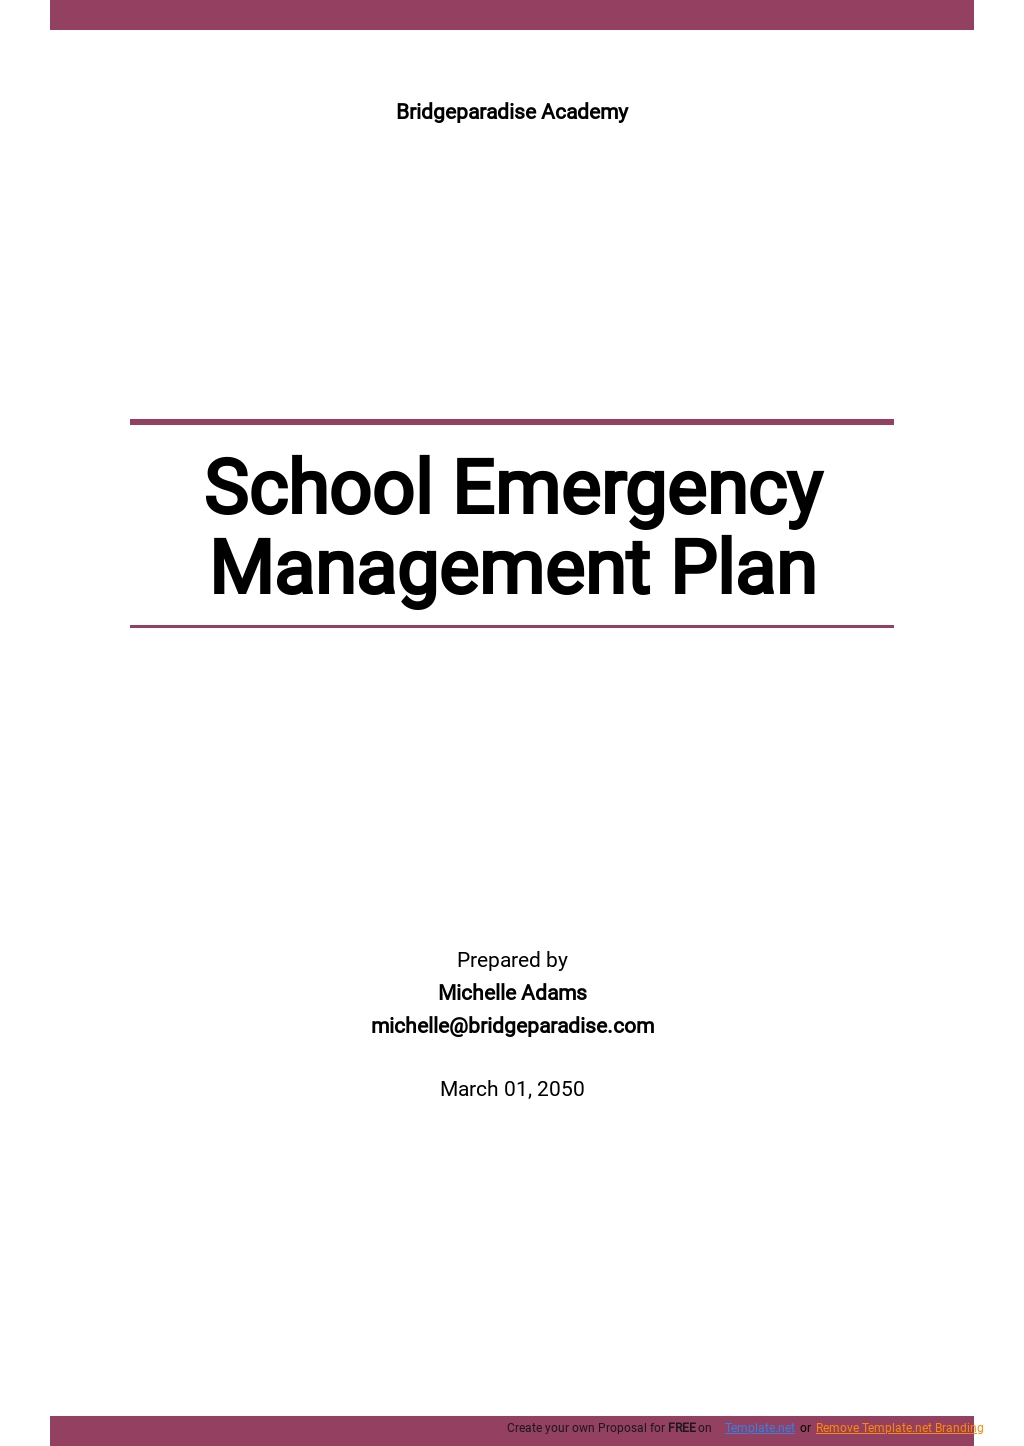 School Emergency Management Plan Template